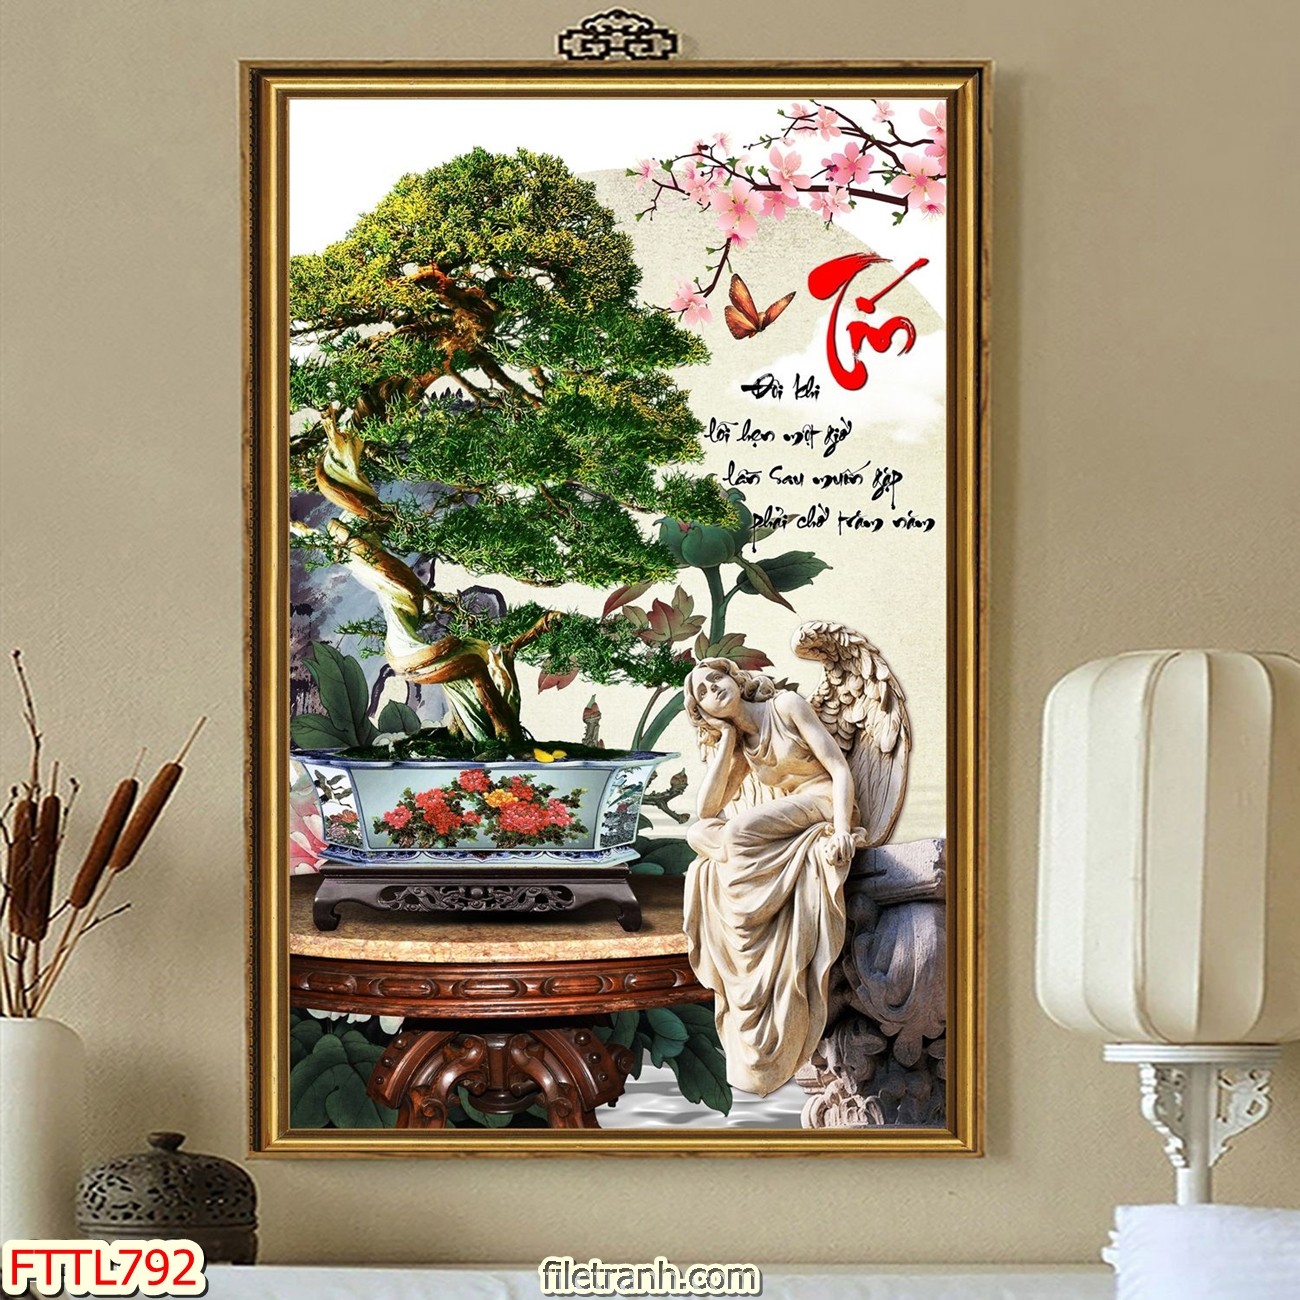 https://filetranh.com/file-tranh-chau-mai-bonsai/file-tranh-chau-mai-bonsai-fttl792.html